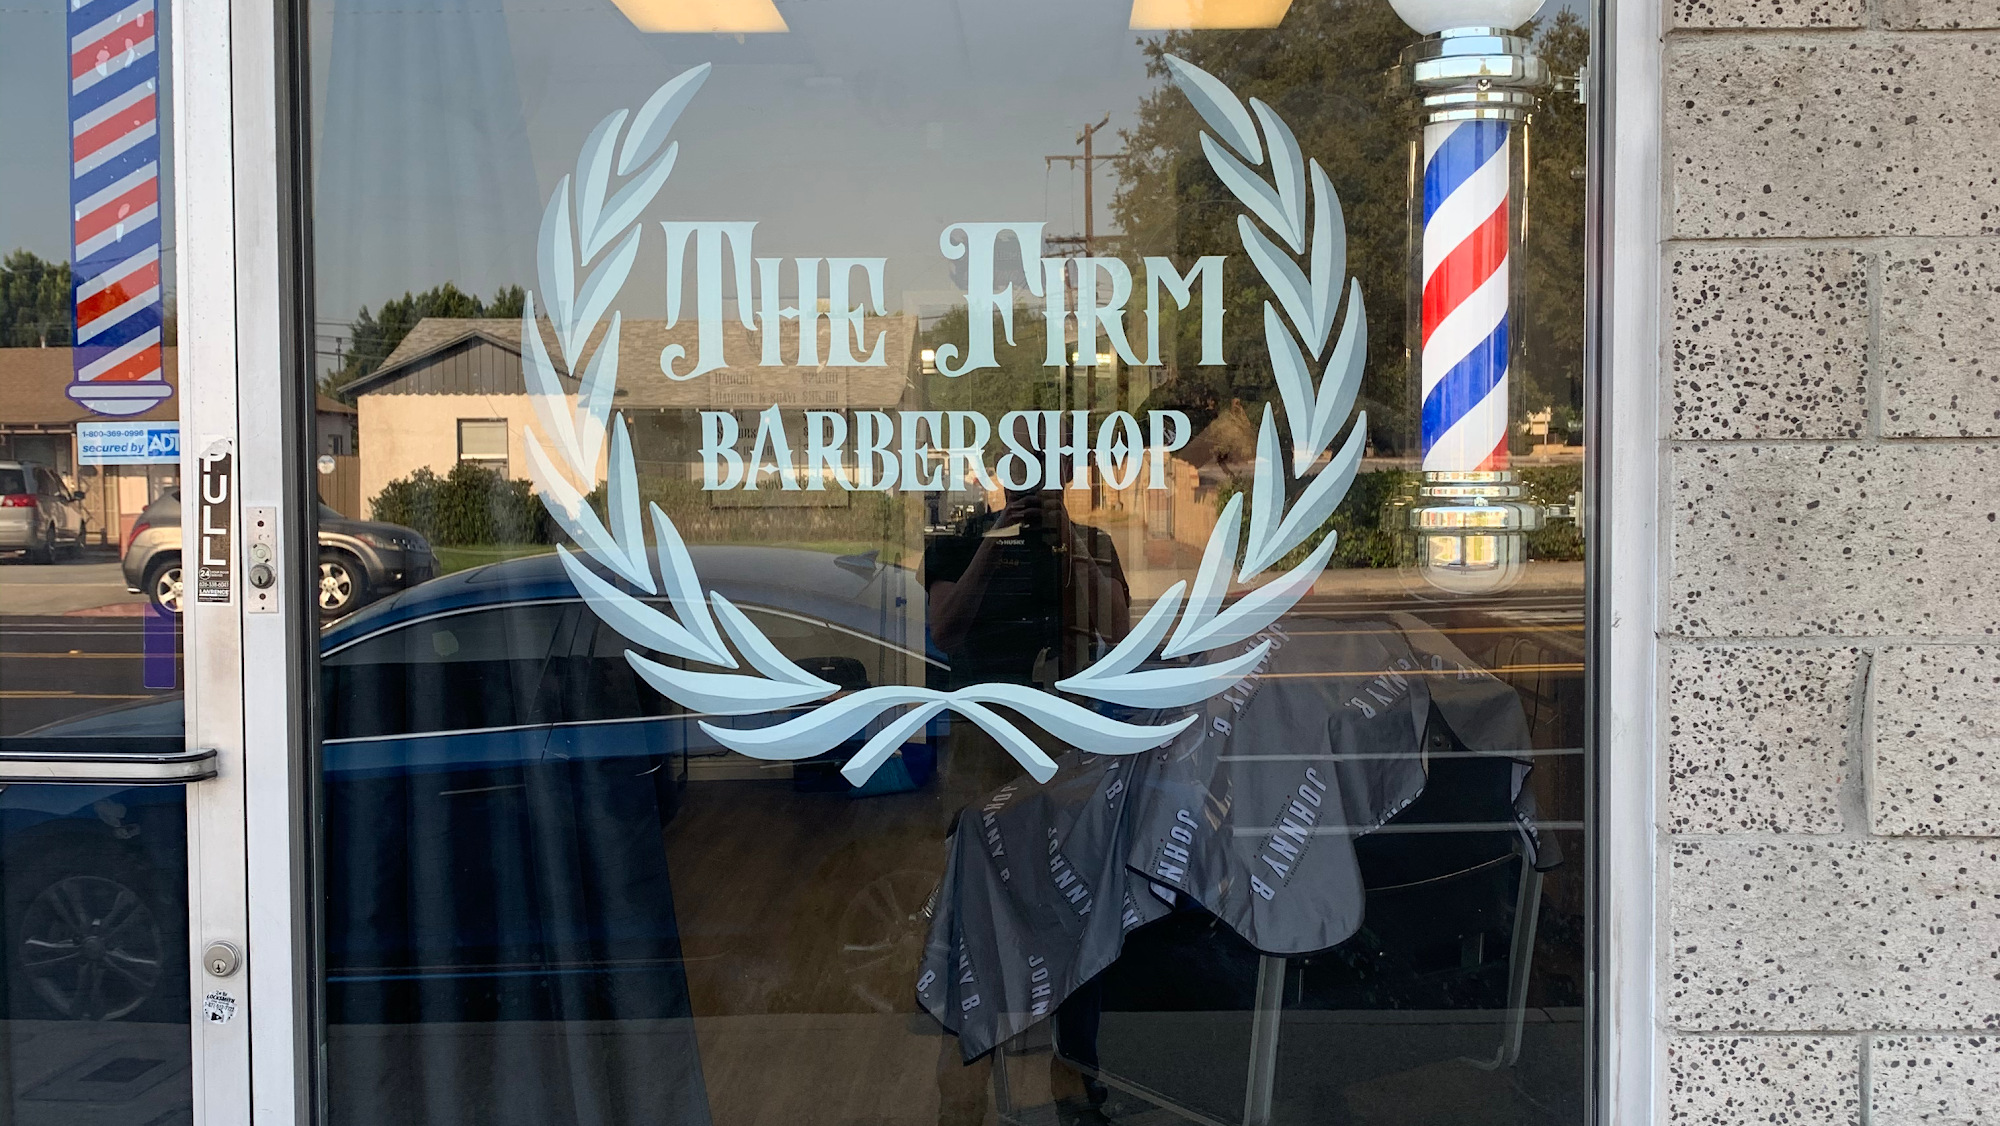 The Firm Barbershop